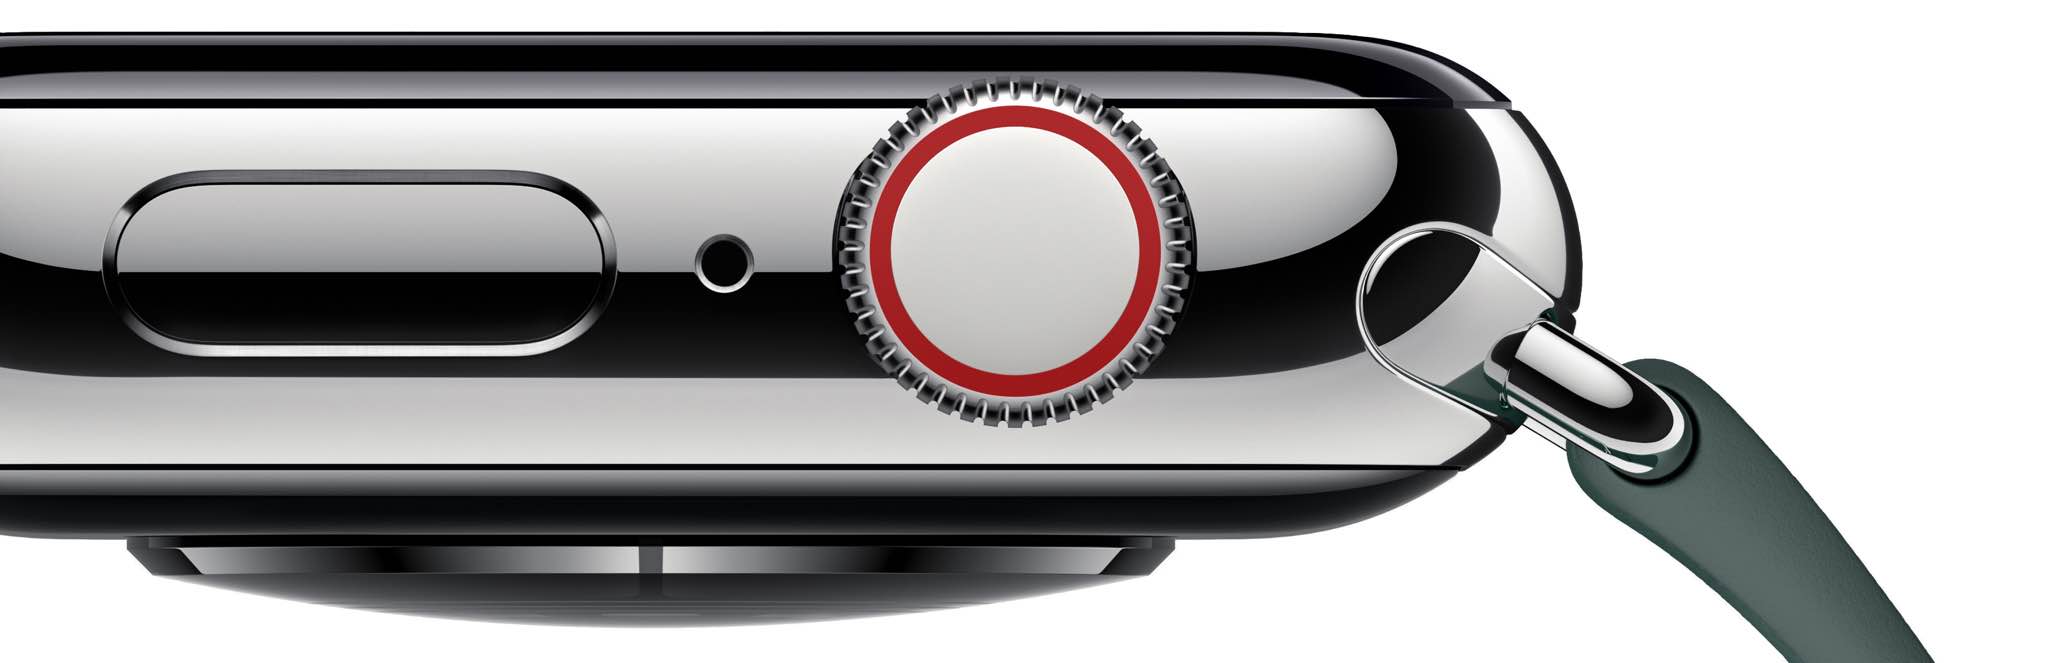 Digital Crown-haptik i aktion Apple Watch Series 4